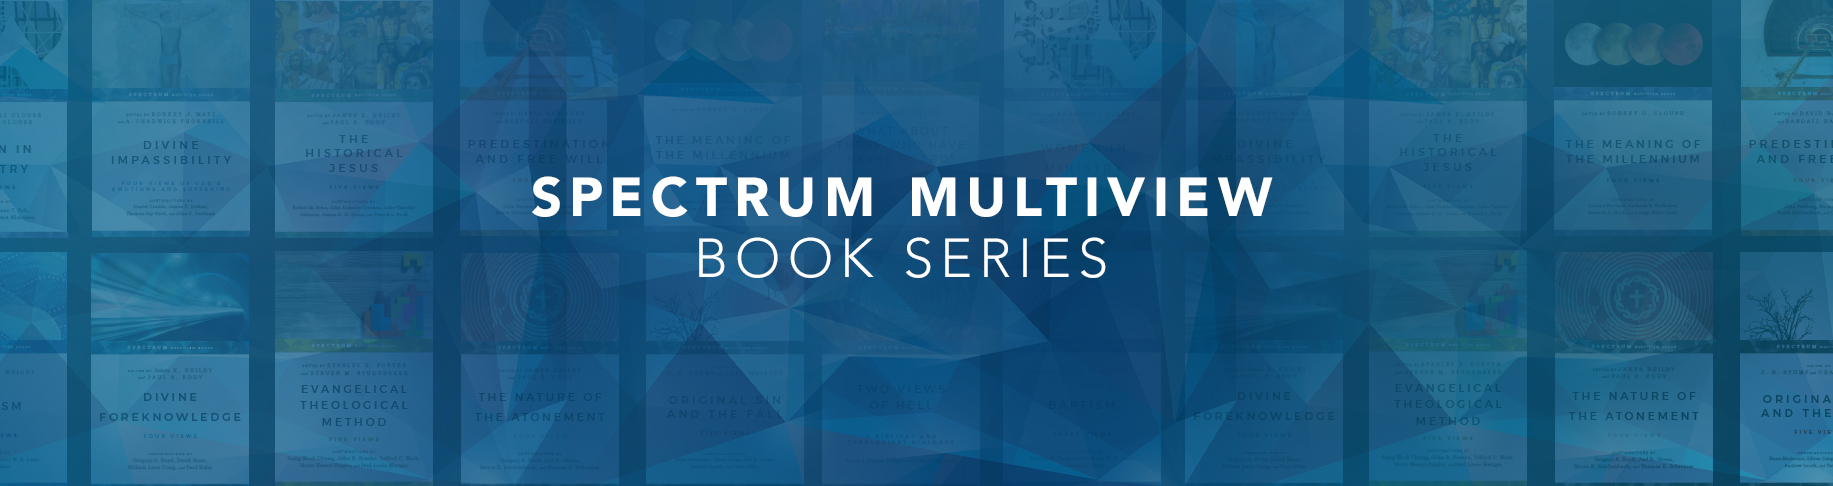 Spectrum Multiview Book Series